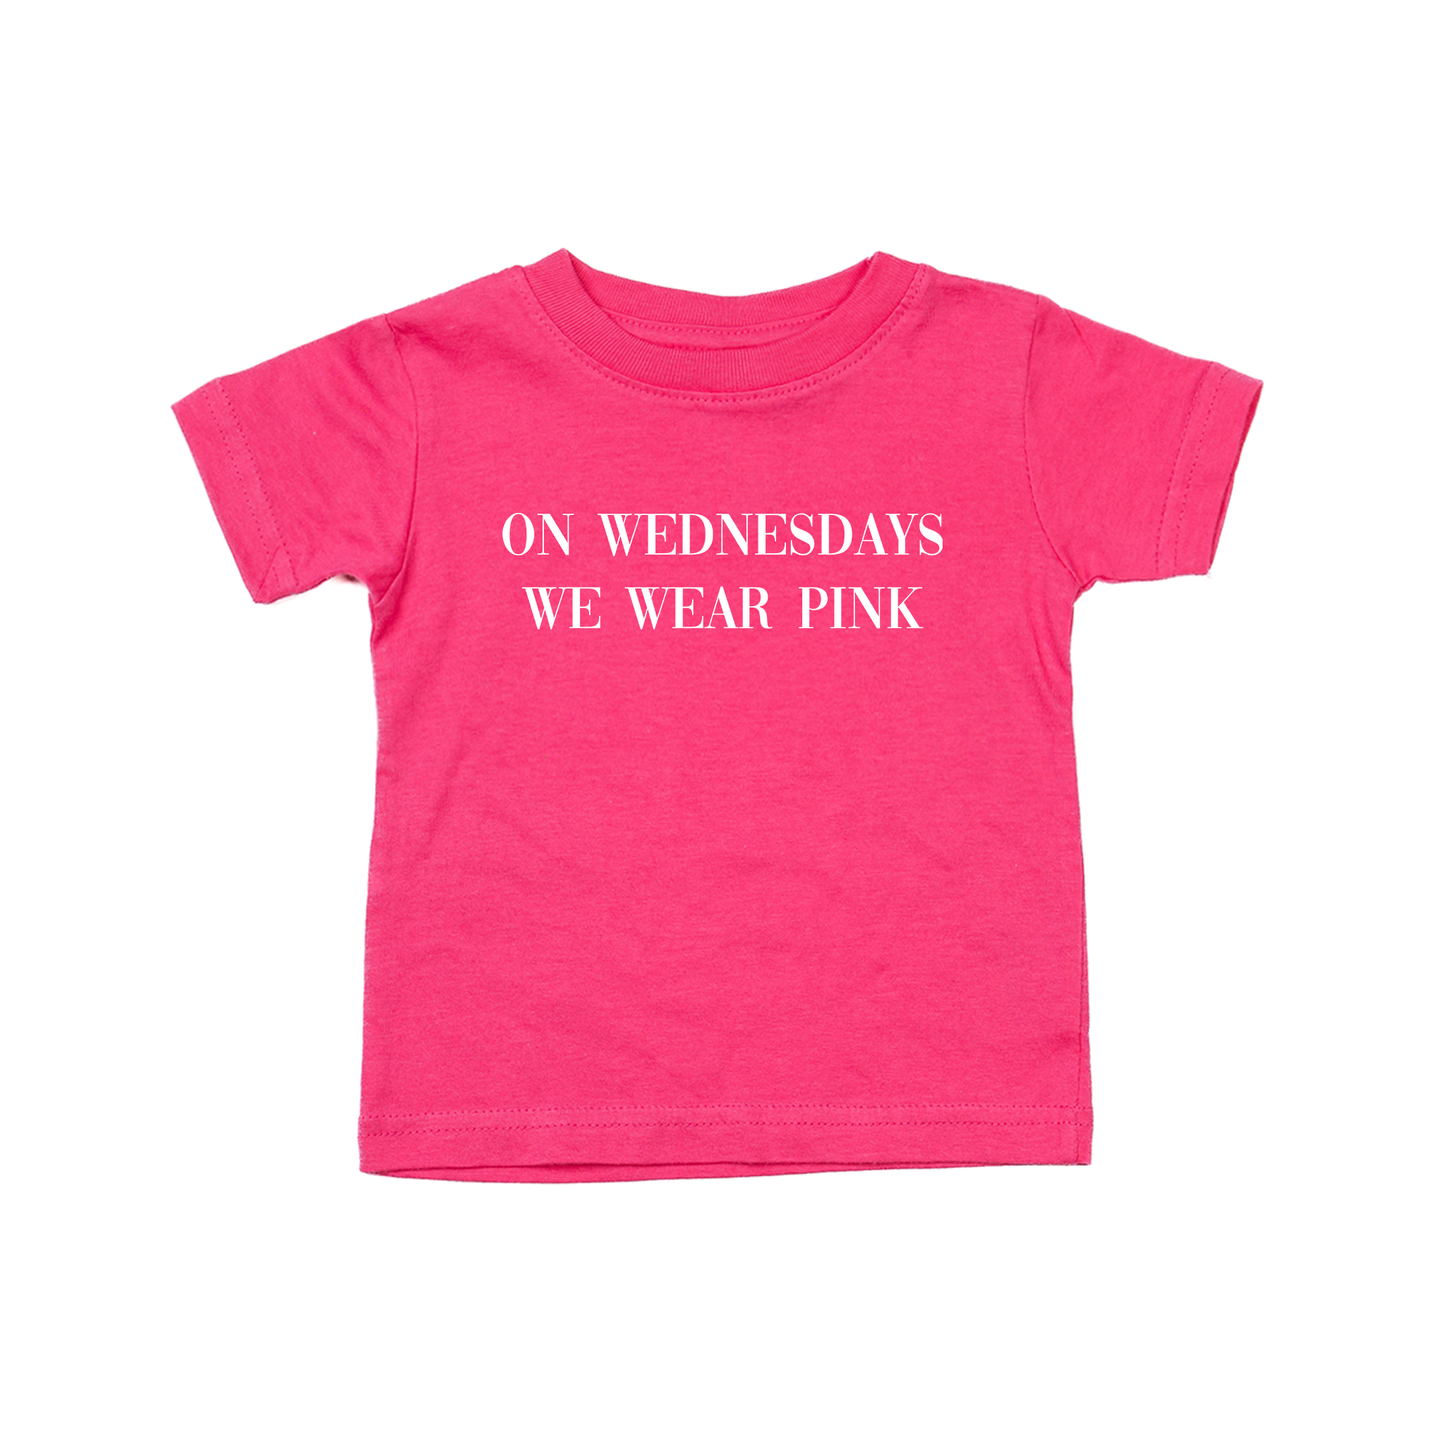 On Wednesdays we wear pink (White) - Kids Tee (Hot Pink)